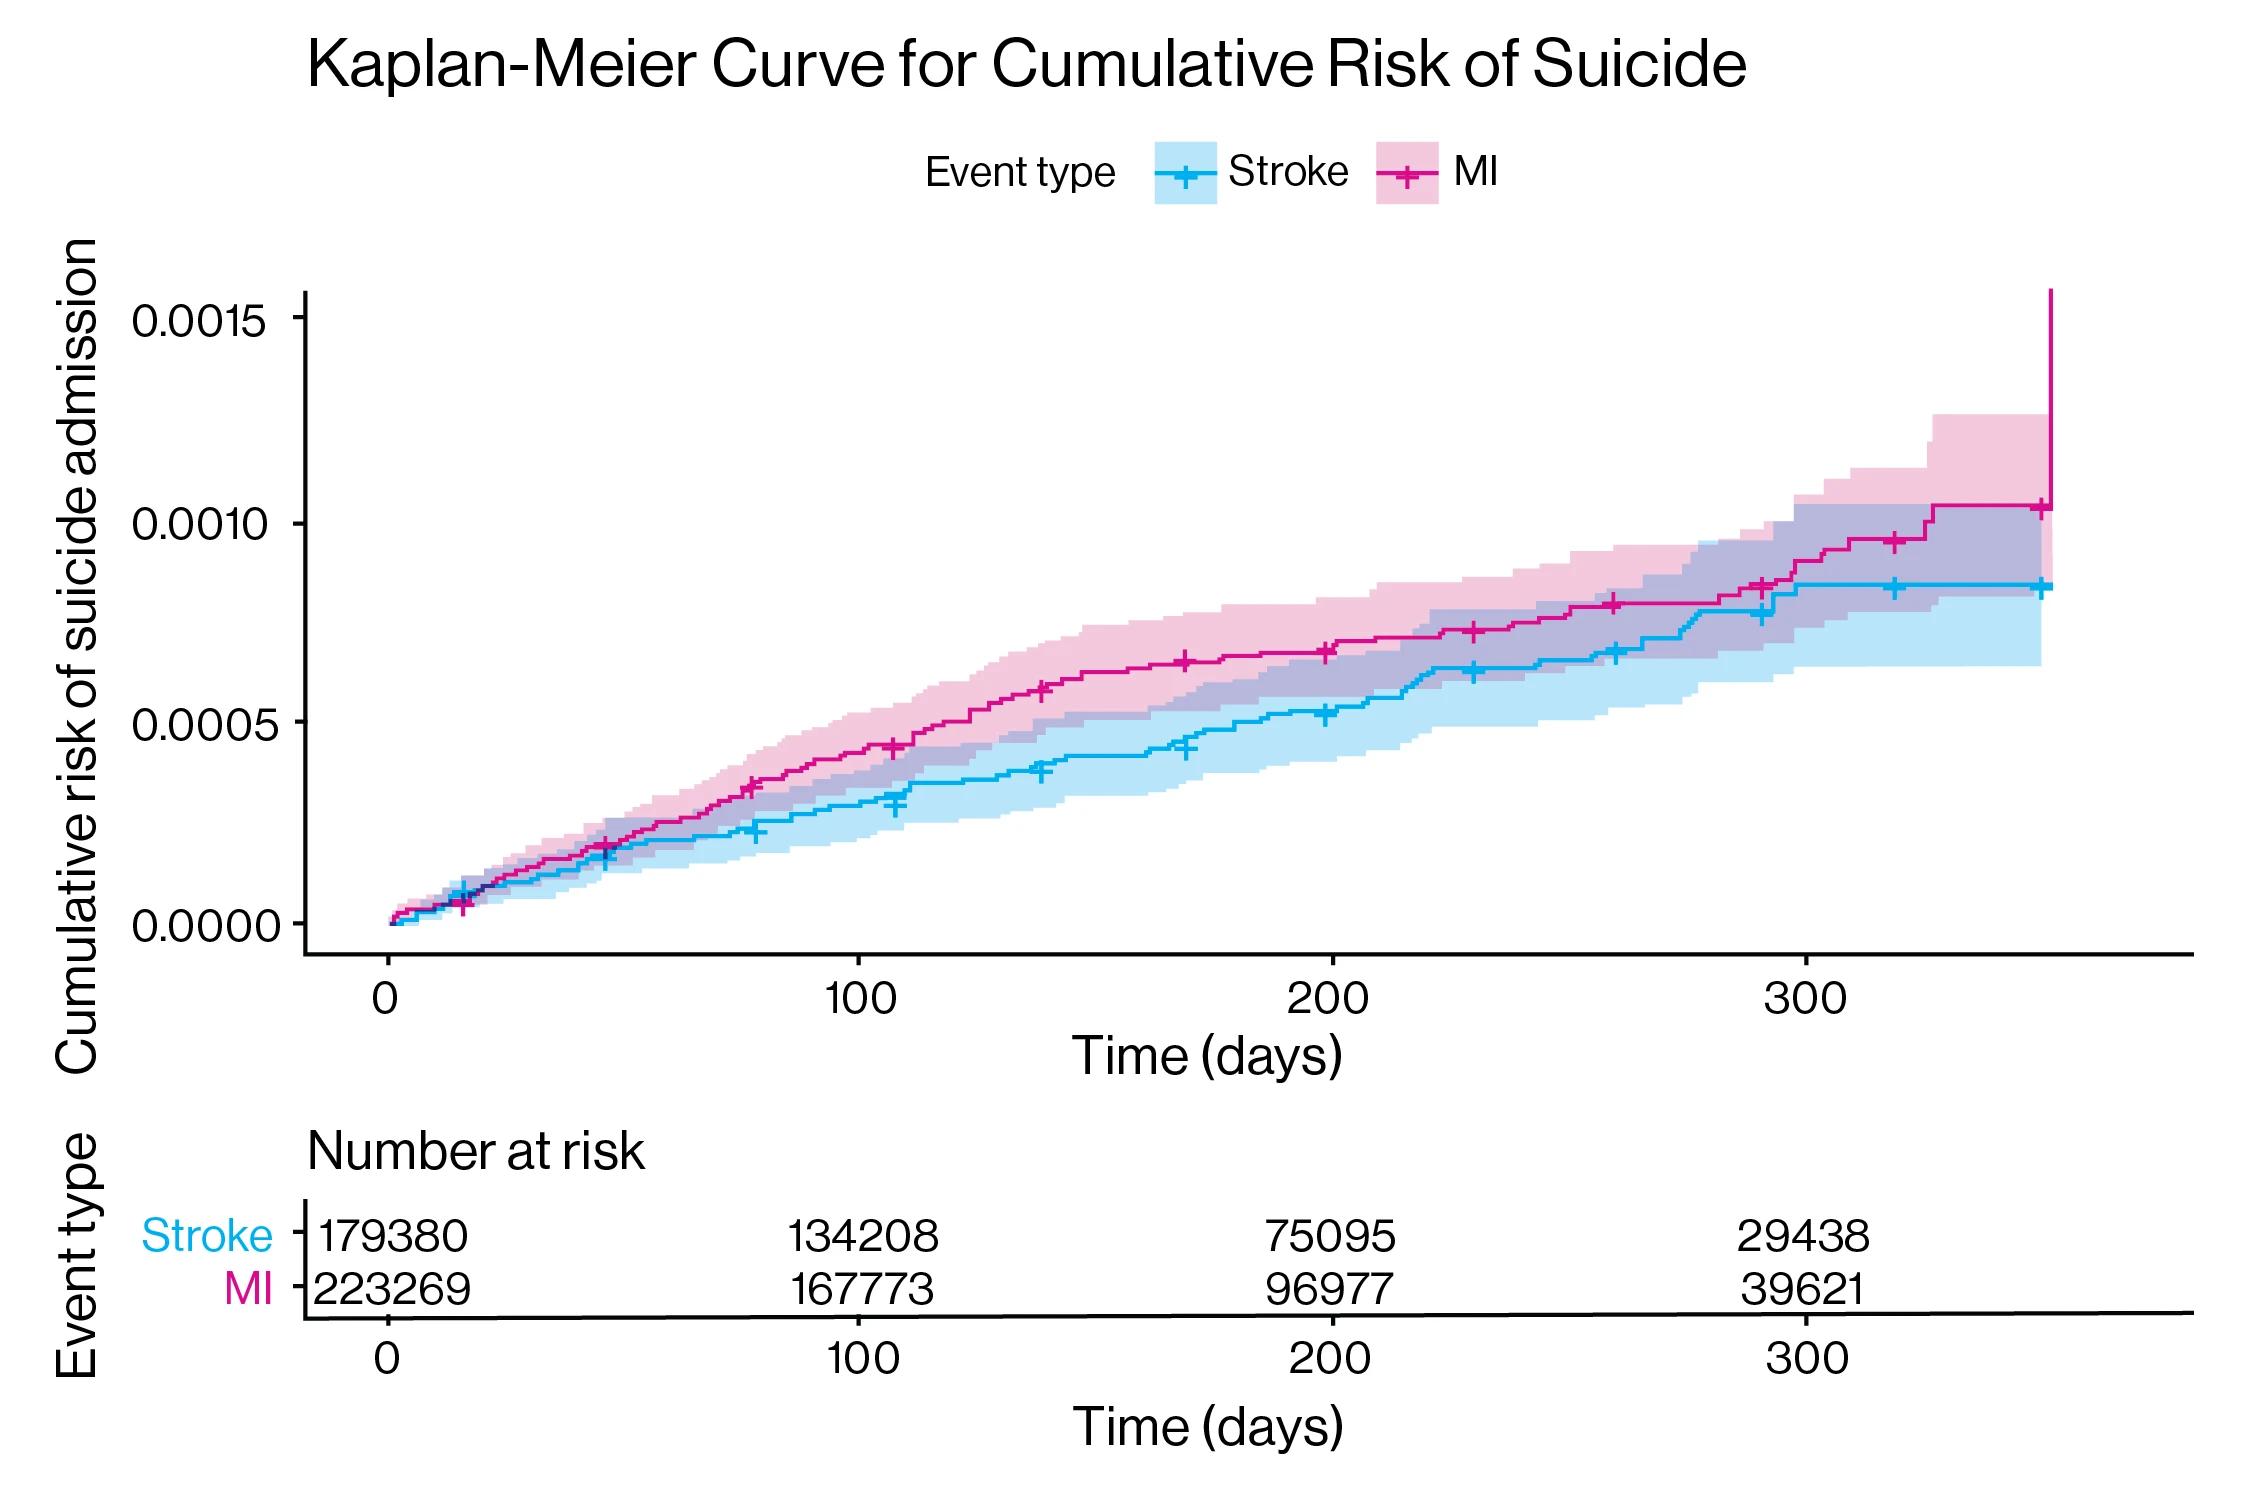 Kaplan-Meier cumulative risk of suicide attempt (SA). 



